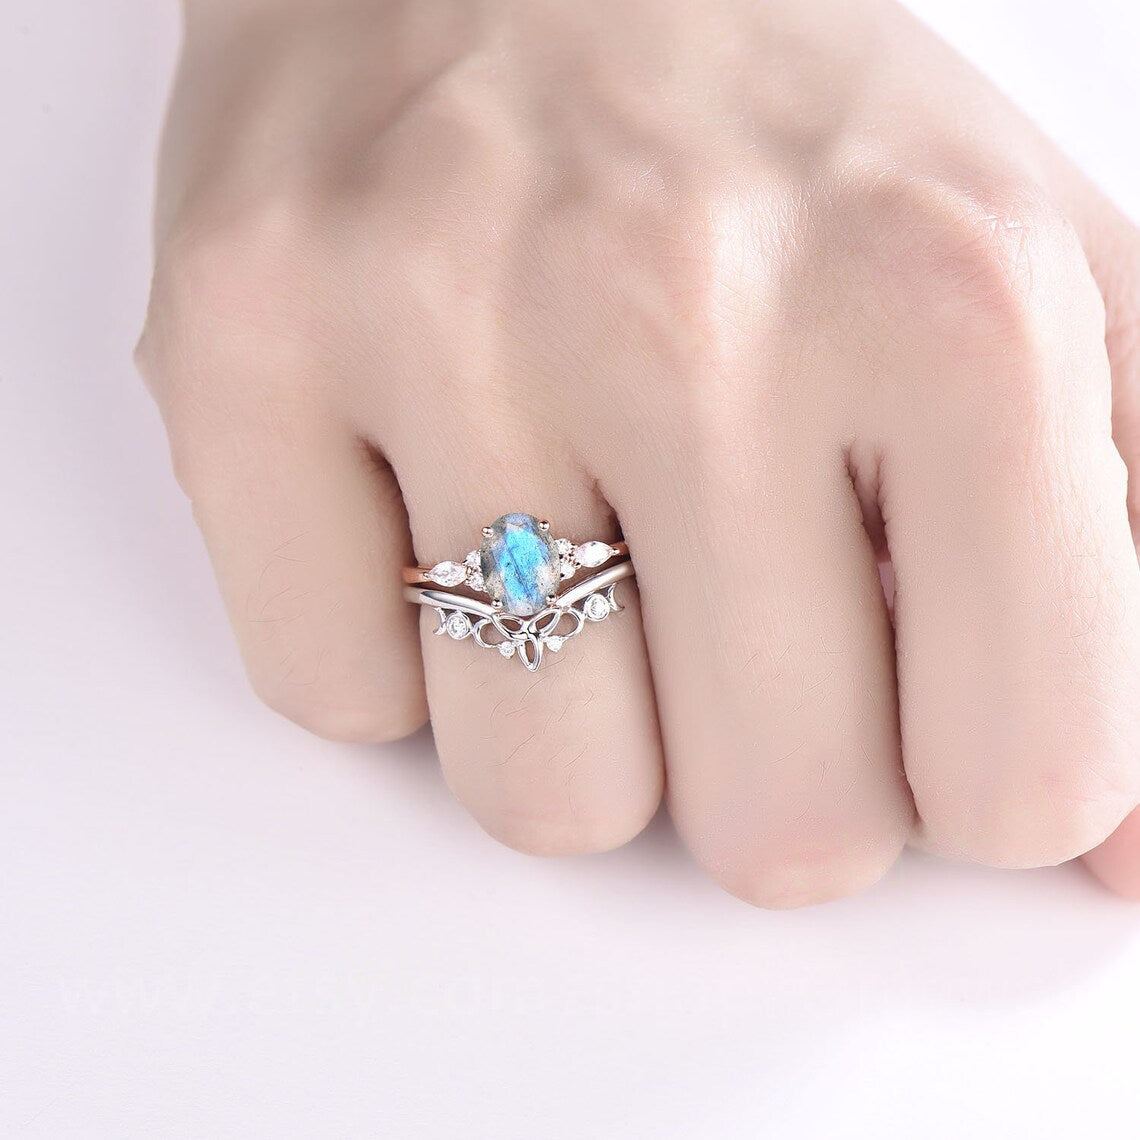 Blue labradorite ring gold sterling silver oval Labradorite engagement ring set art deco vintage marquise moissanite bridal promise ring set